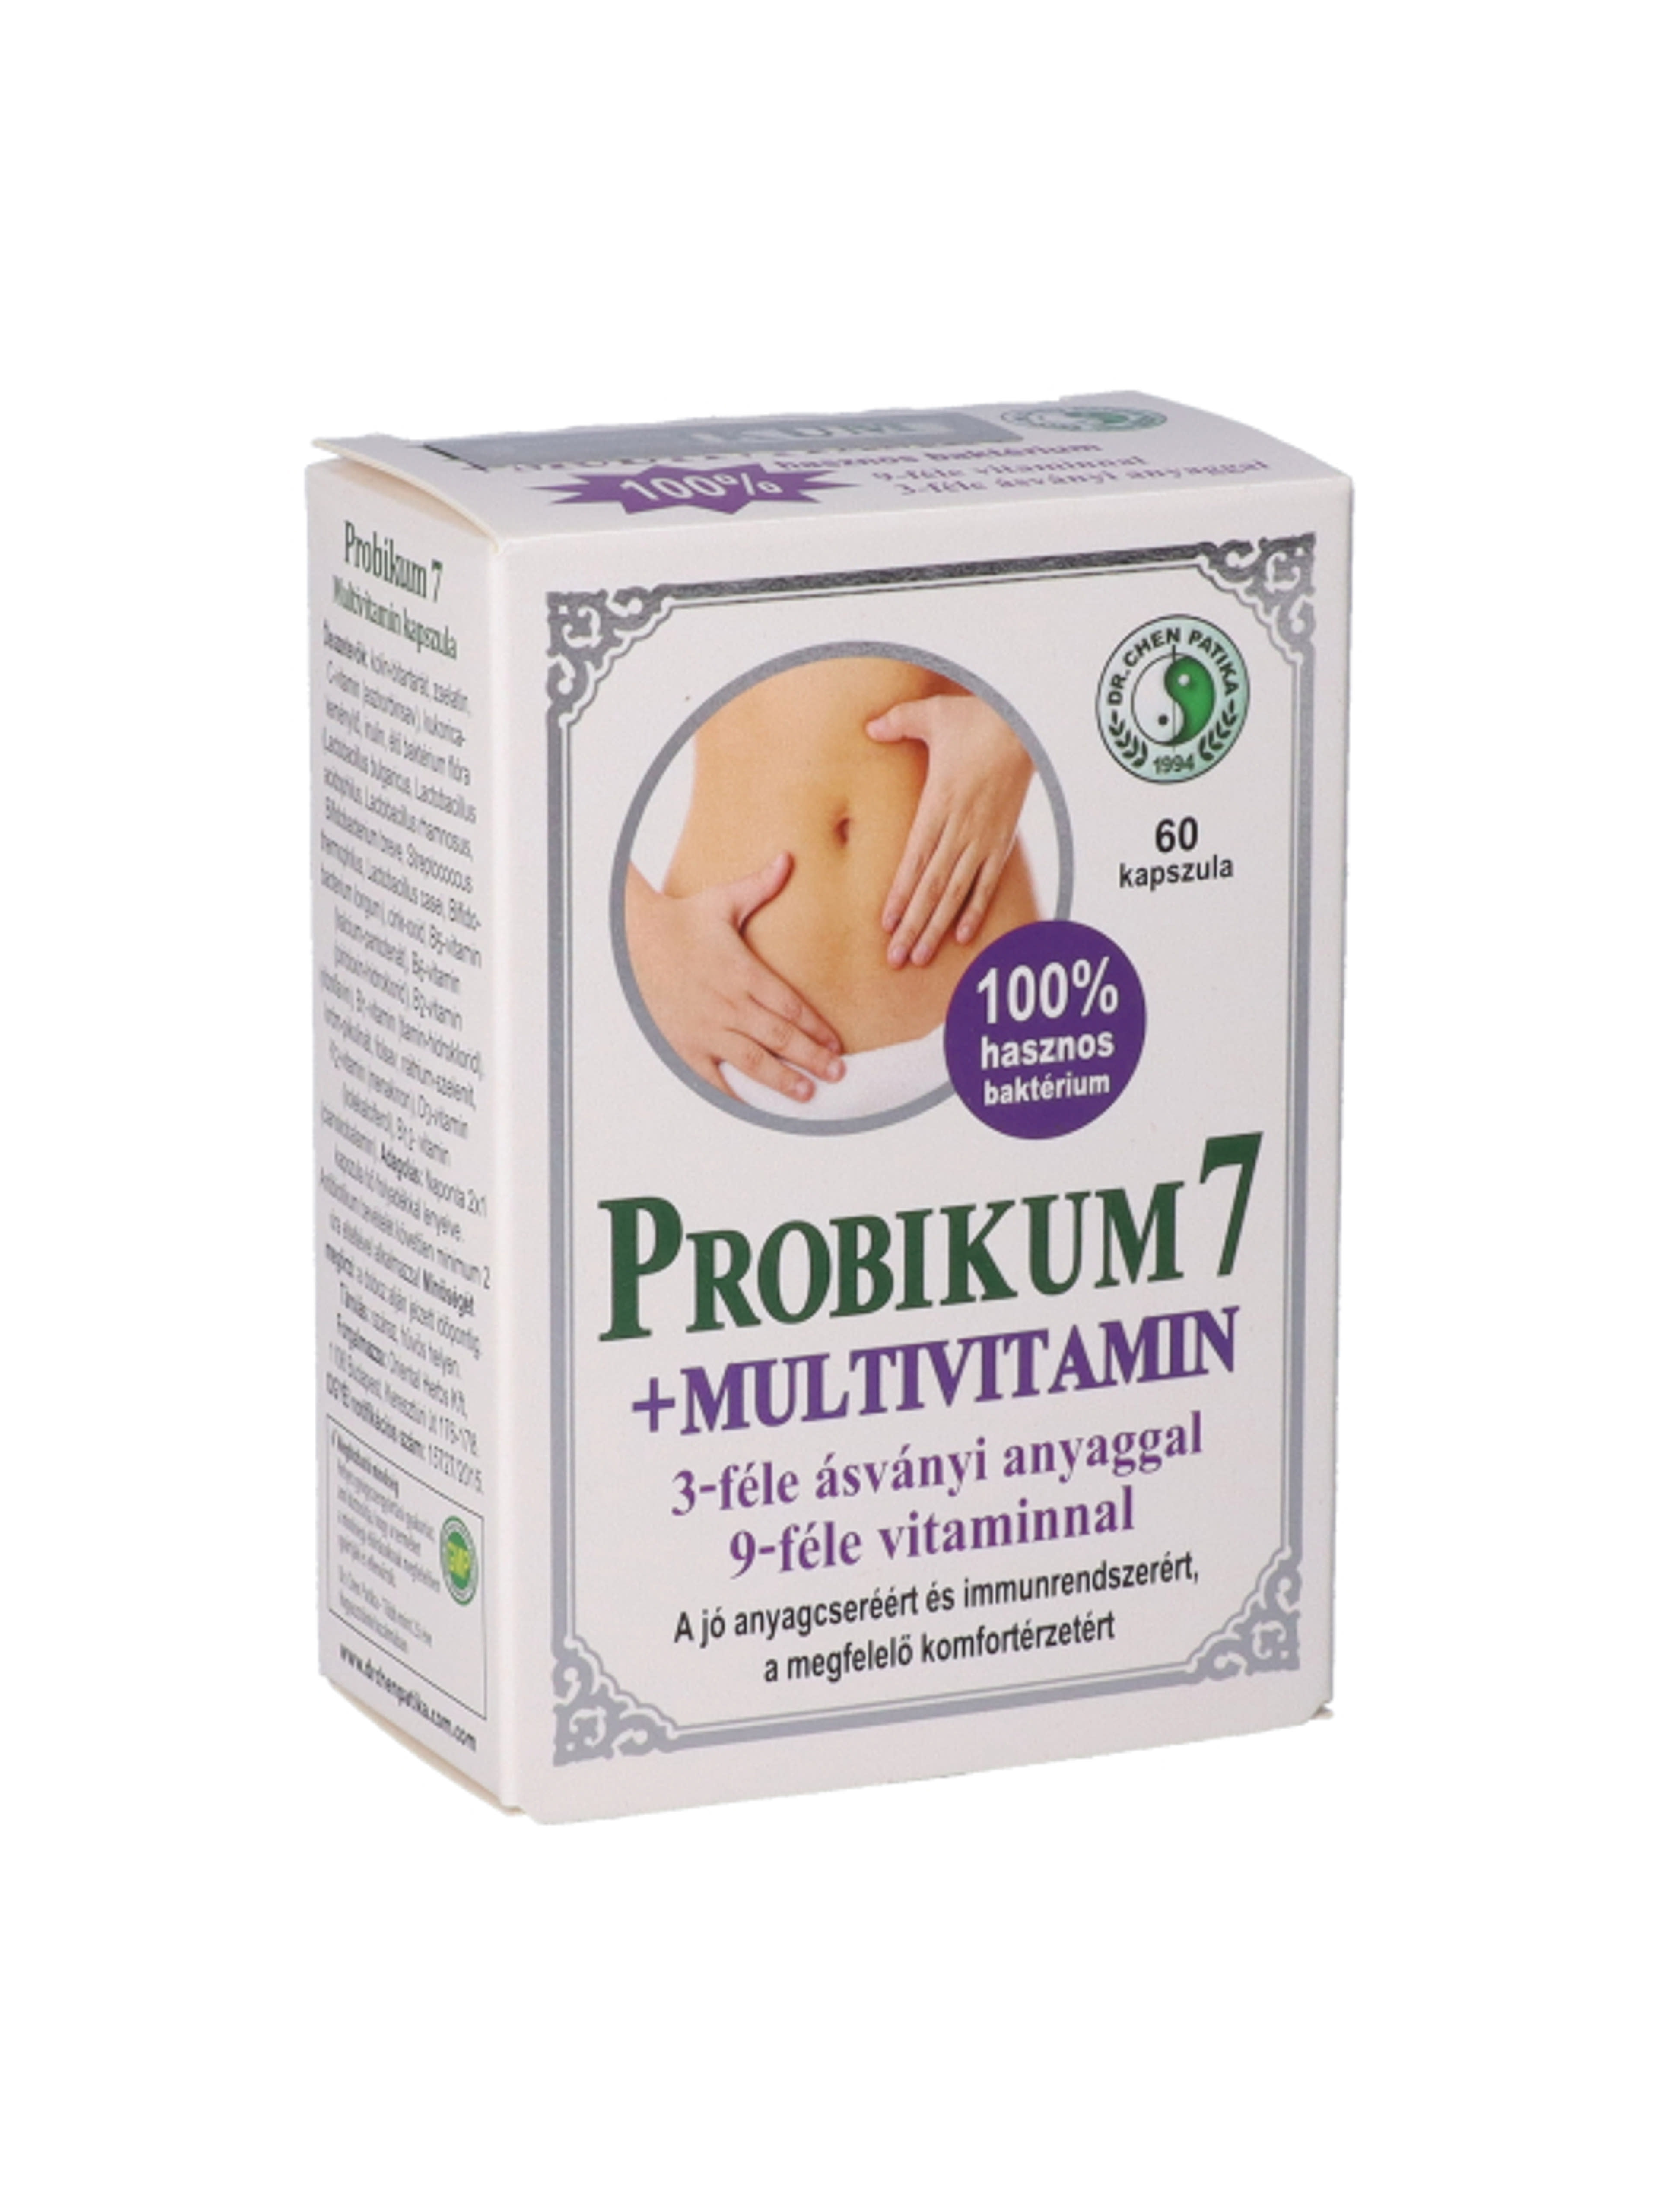 Dr.Chen Patika probiotikum 7 multivitamin kapszula - 60 db-1